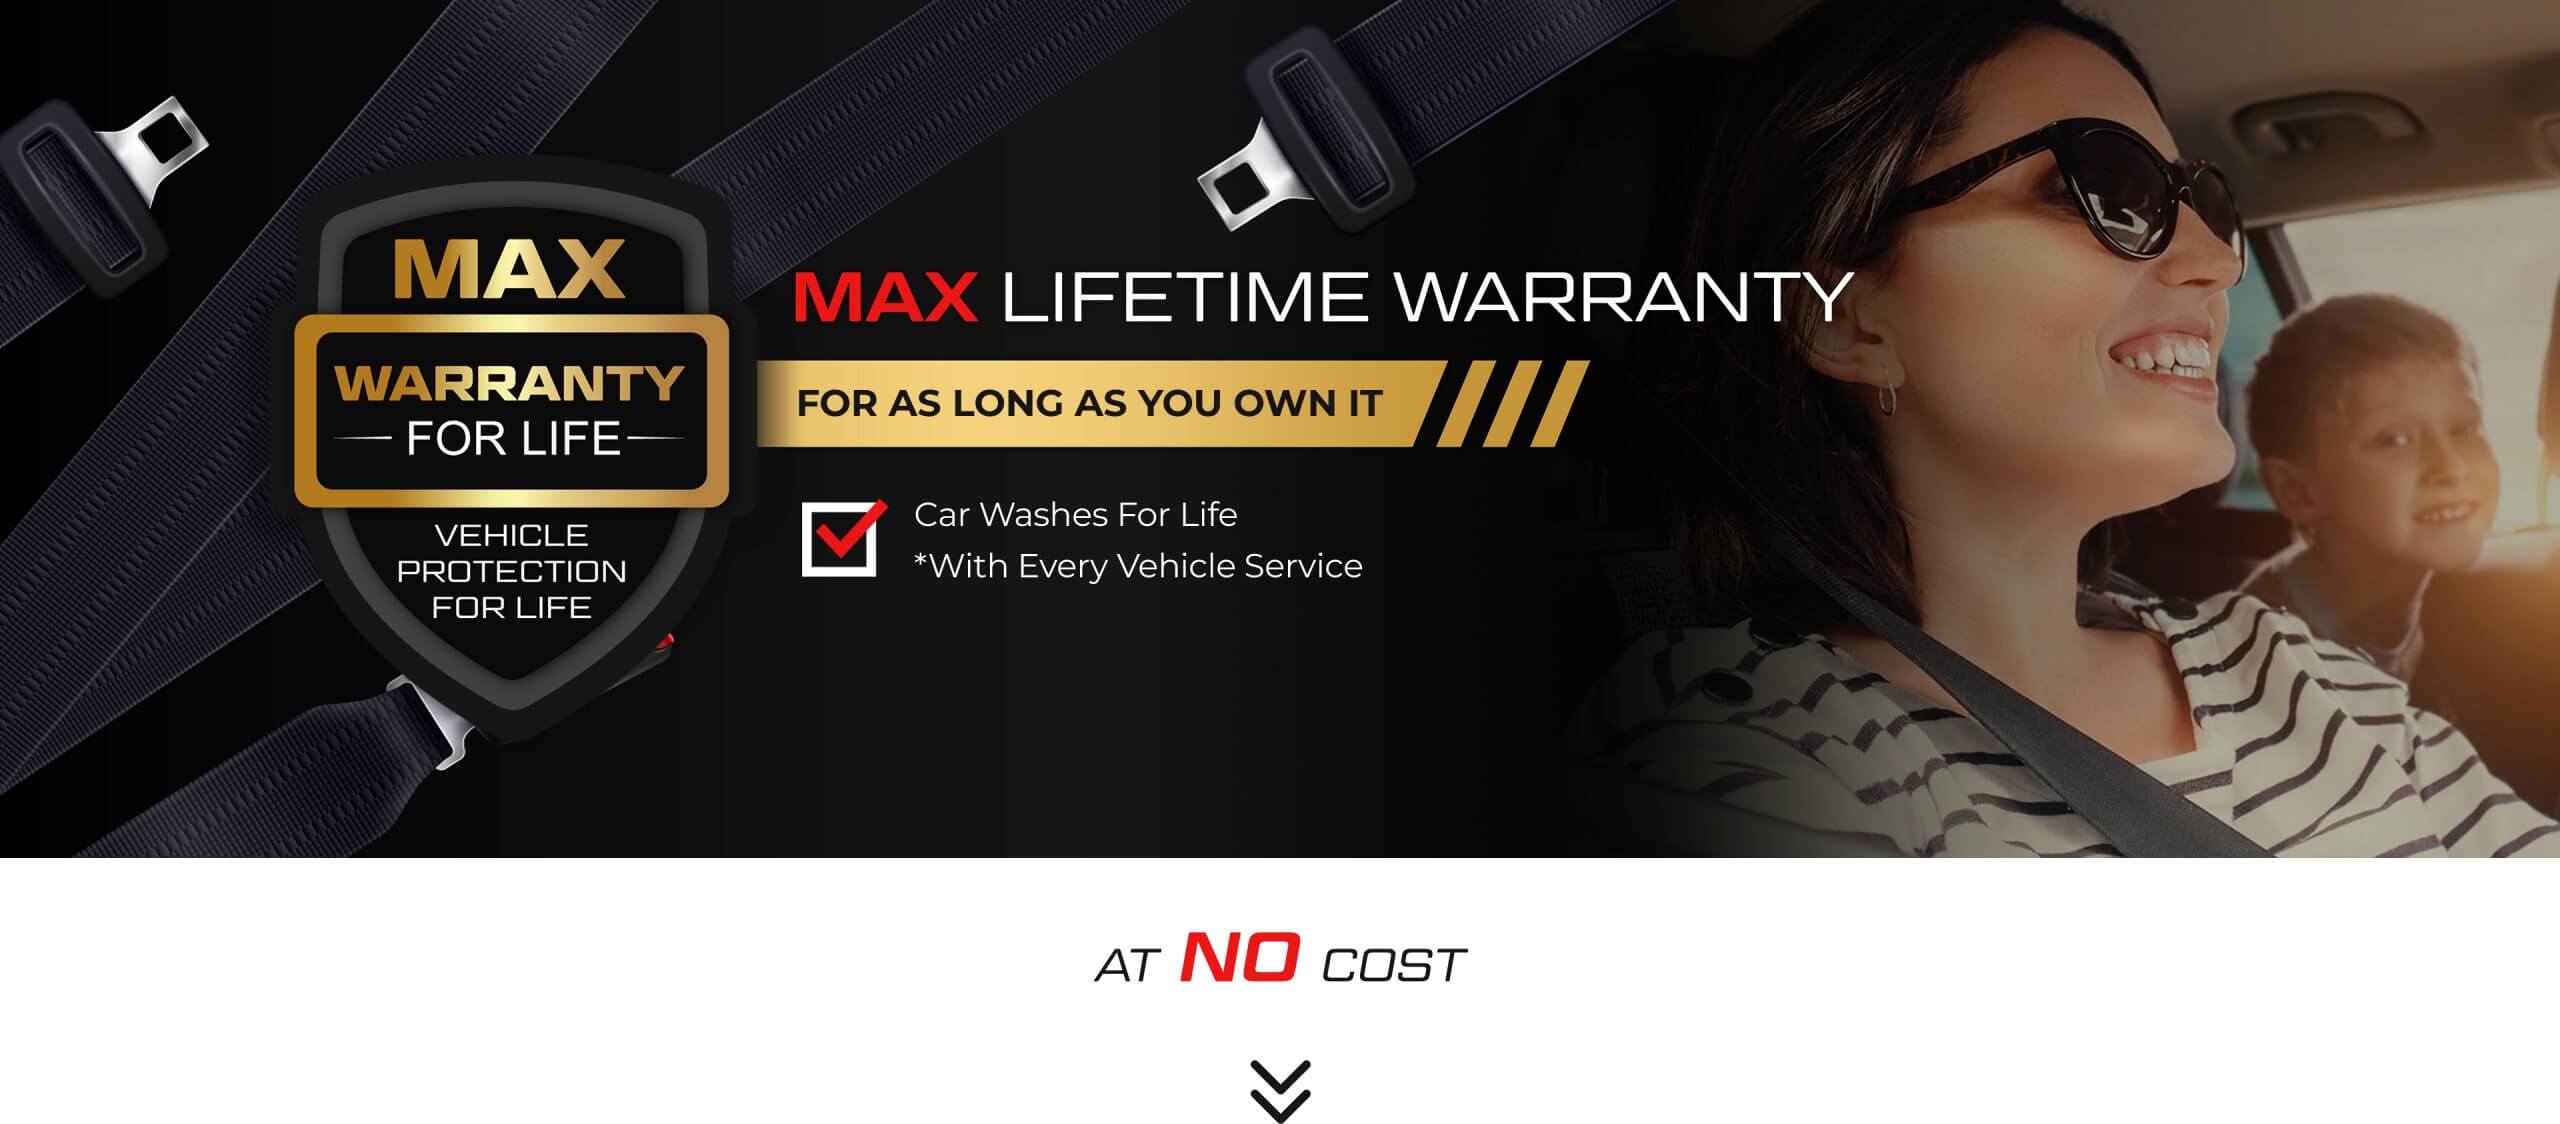 Max lifetime warranty at no cost.